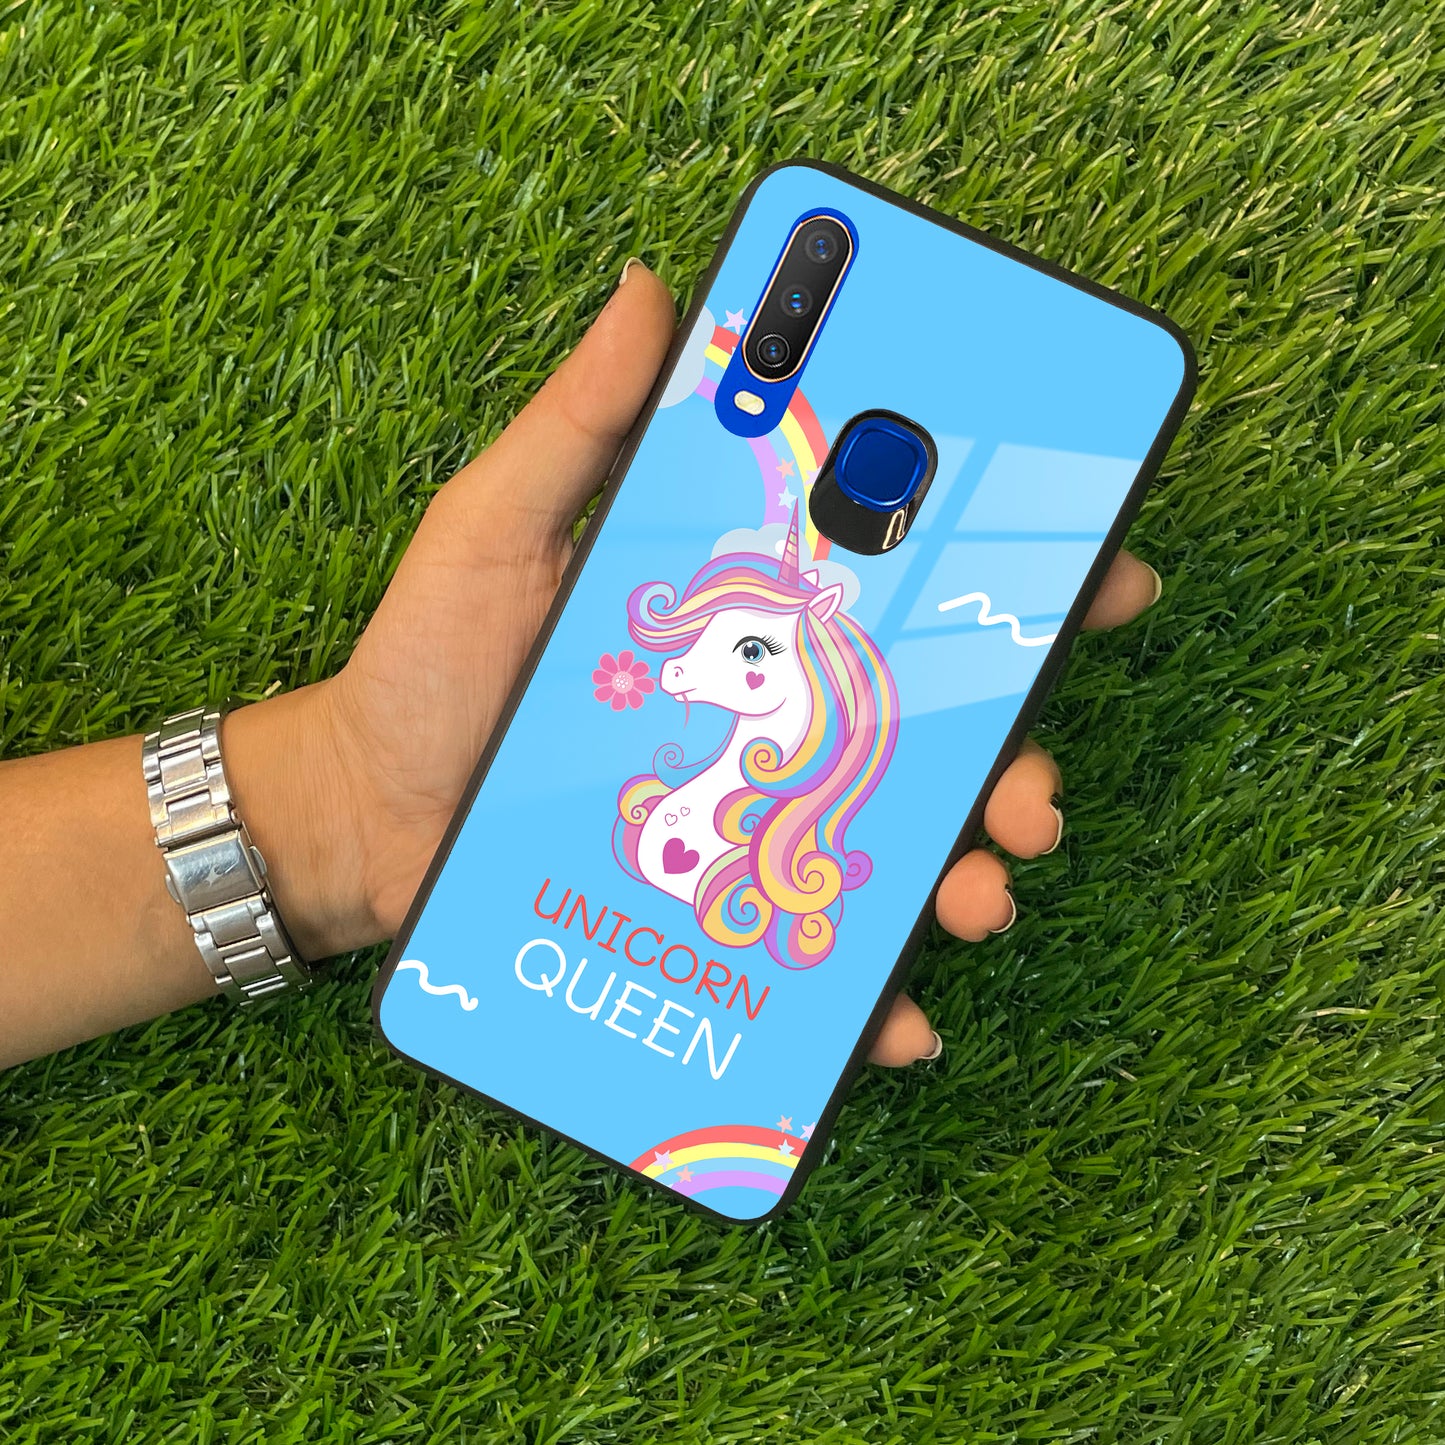 Blue Unicorn Queen Glass Phone Case For Vivo